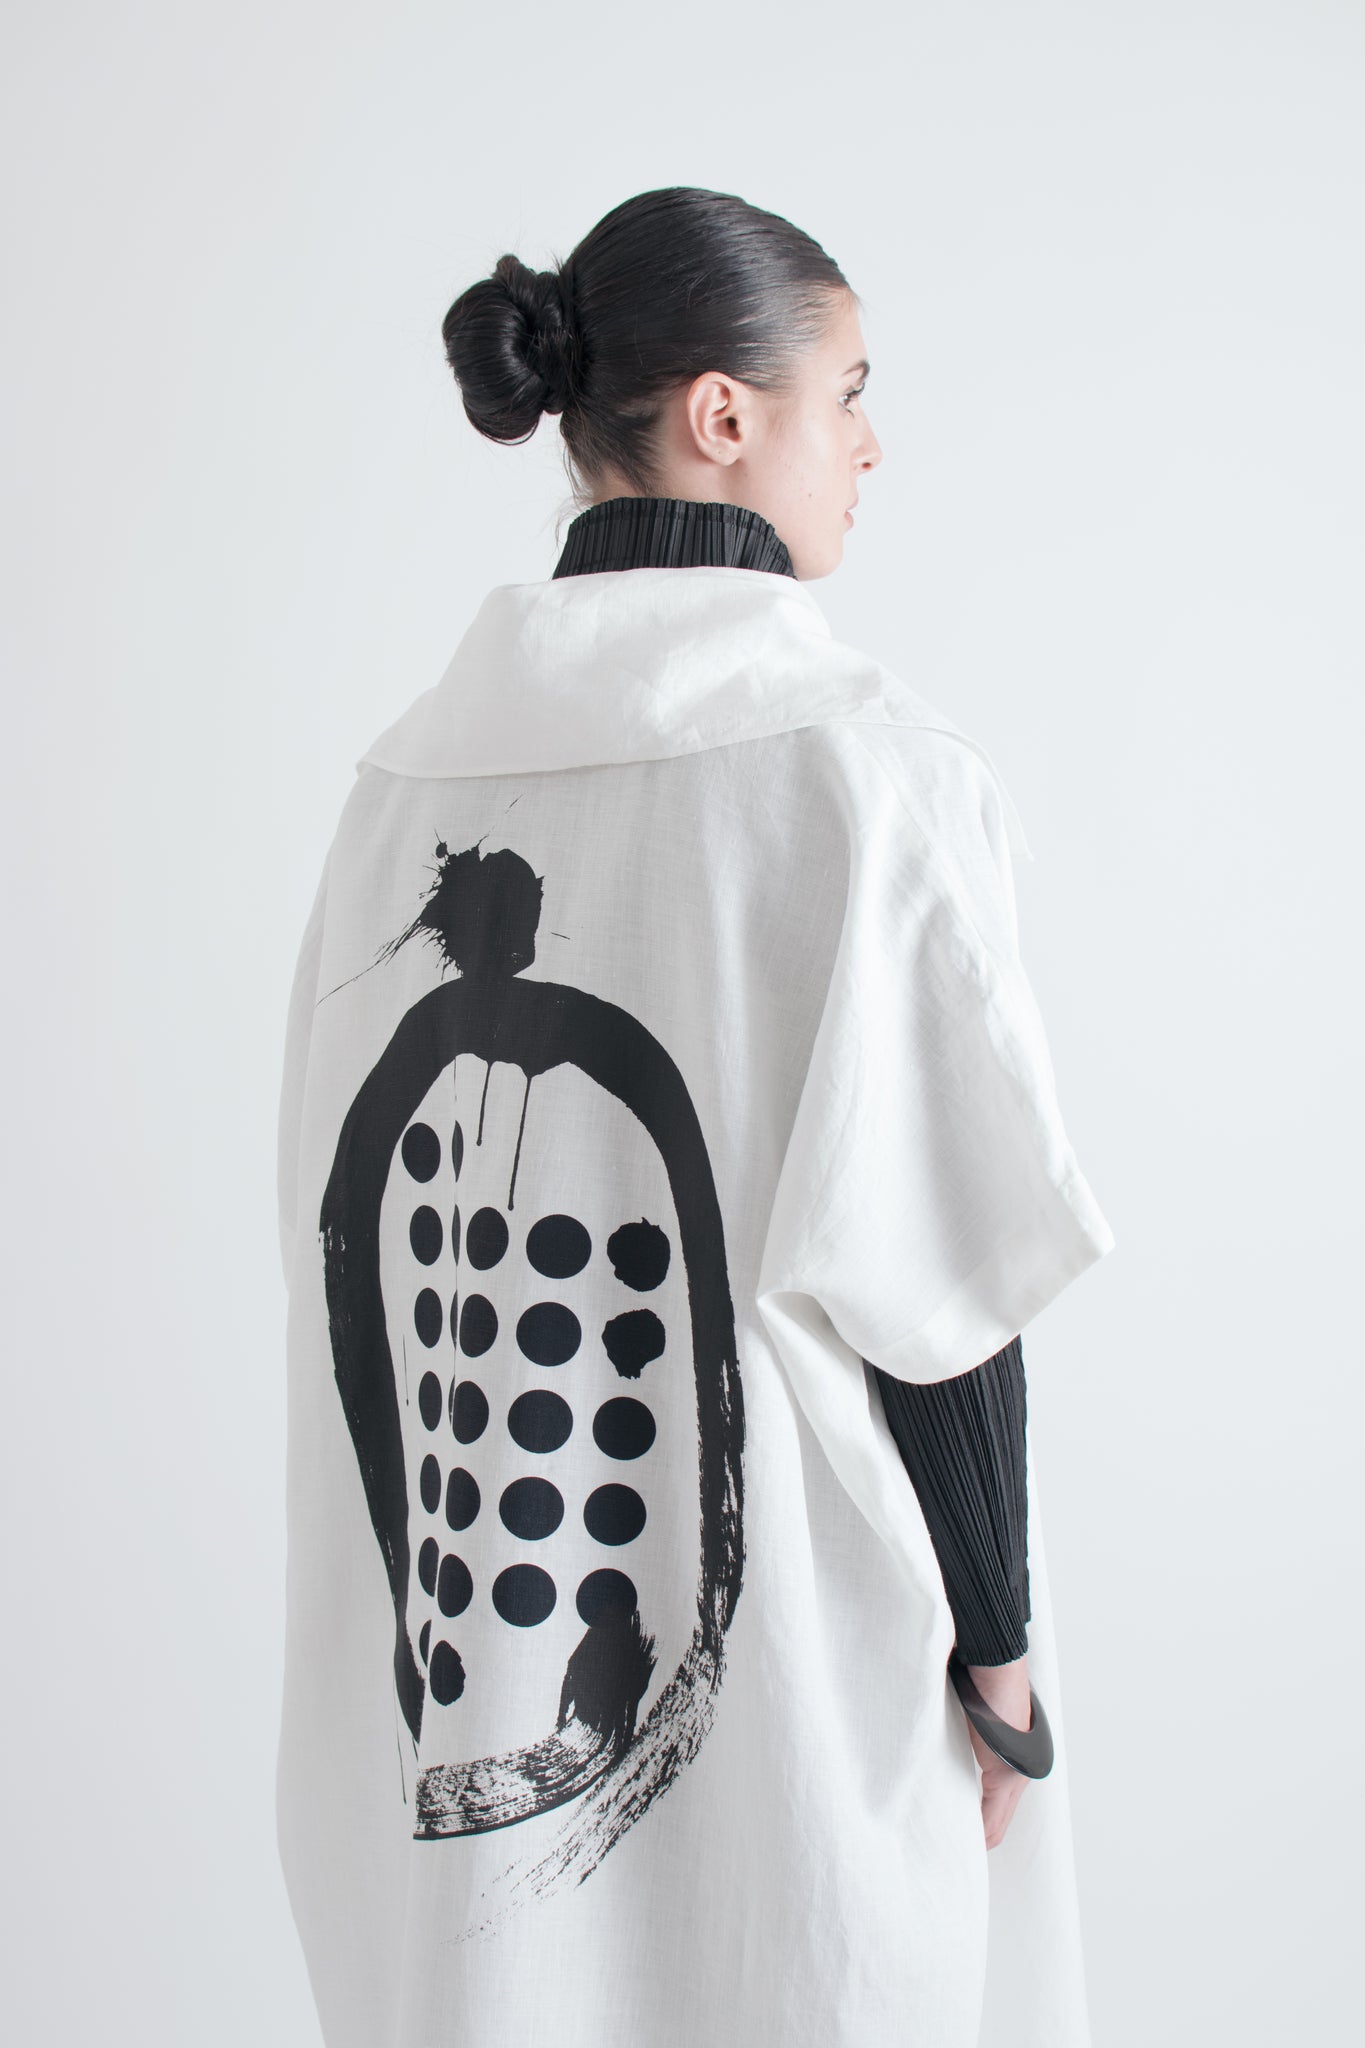 Issey Miyake & Ikko Tanaka Collaboration No. 2 Linen Dress – Lust 